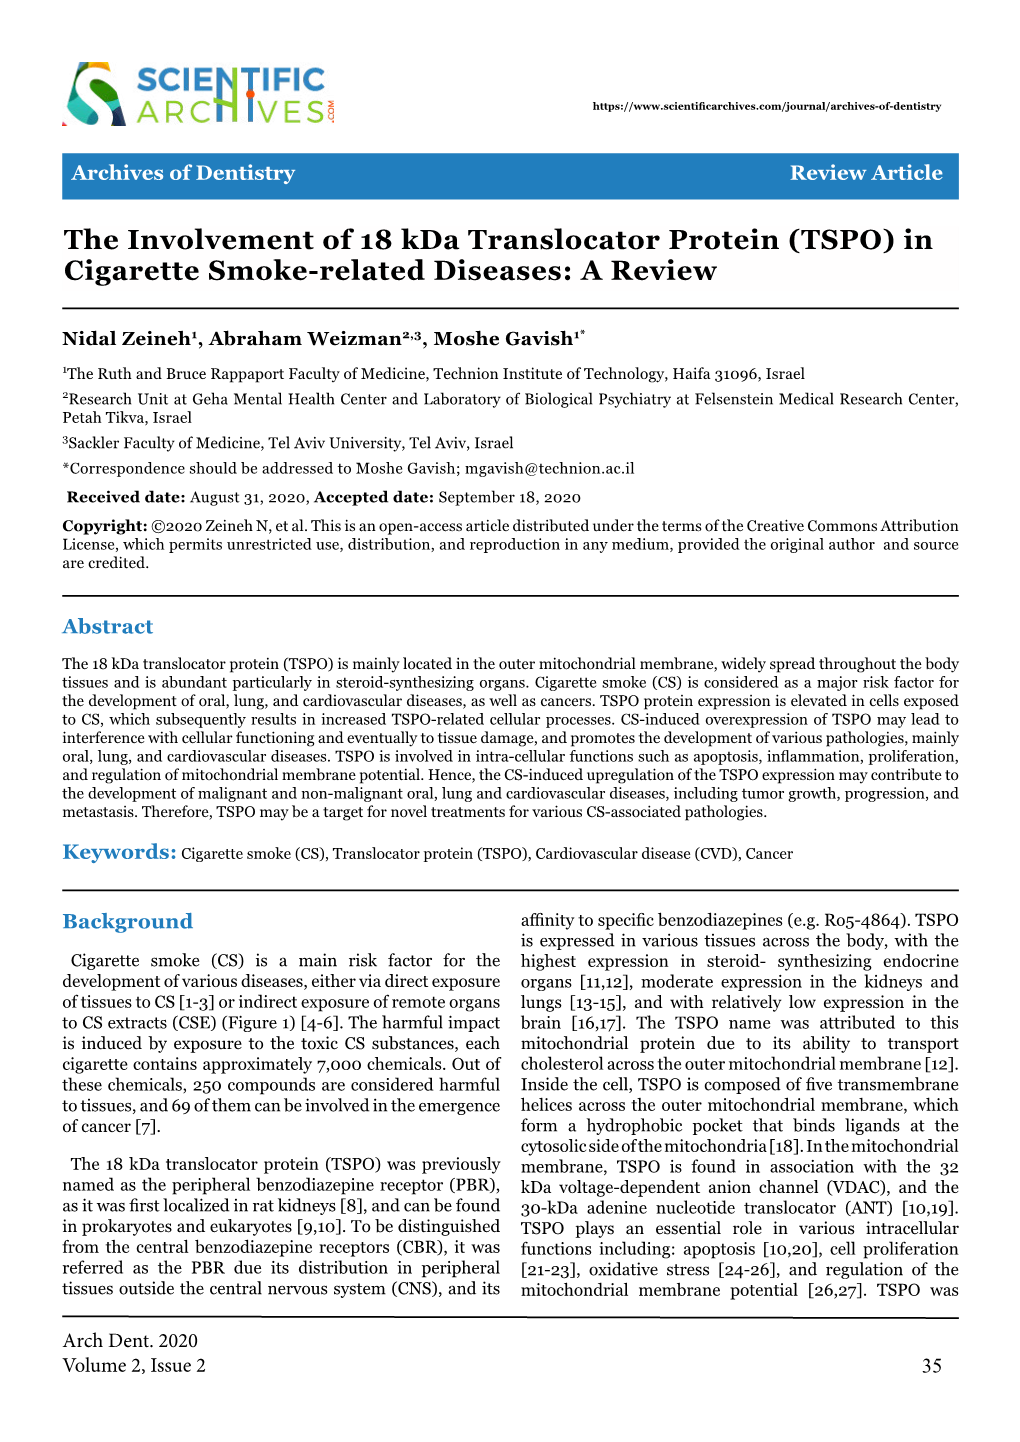 The Involvement of 18 Kda Translocator Protein (TSPO) in Cigarette Smoke-Related Diseases: a Review